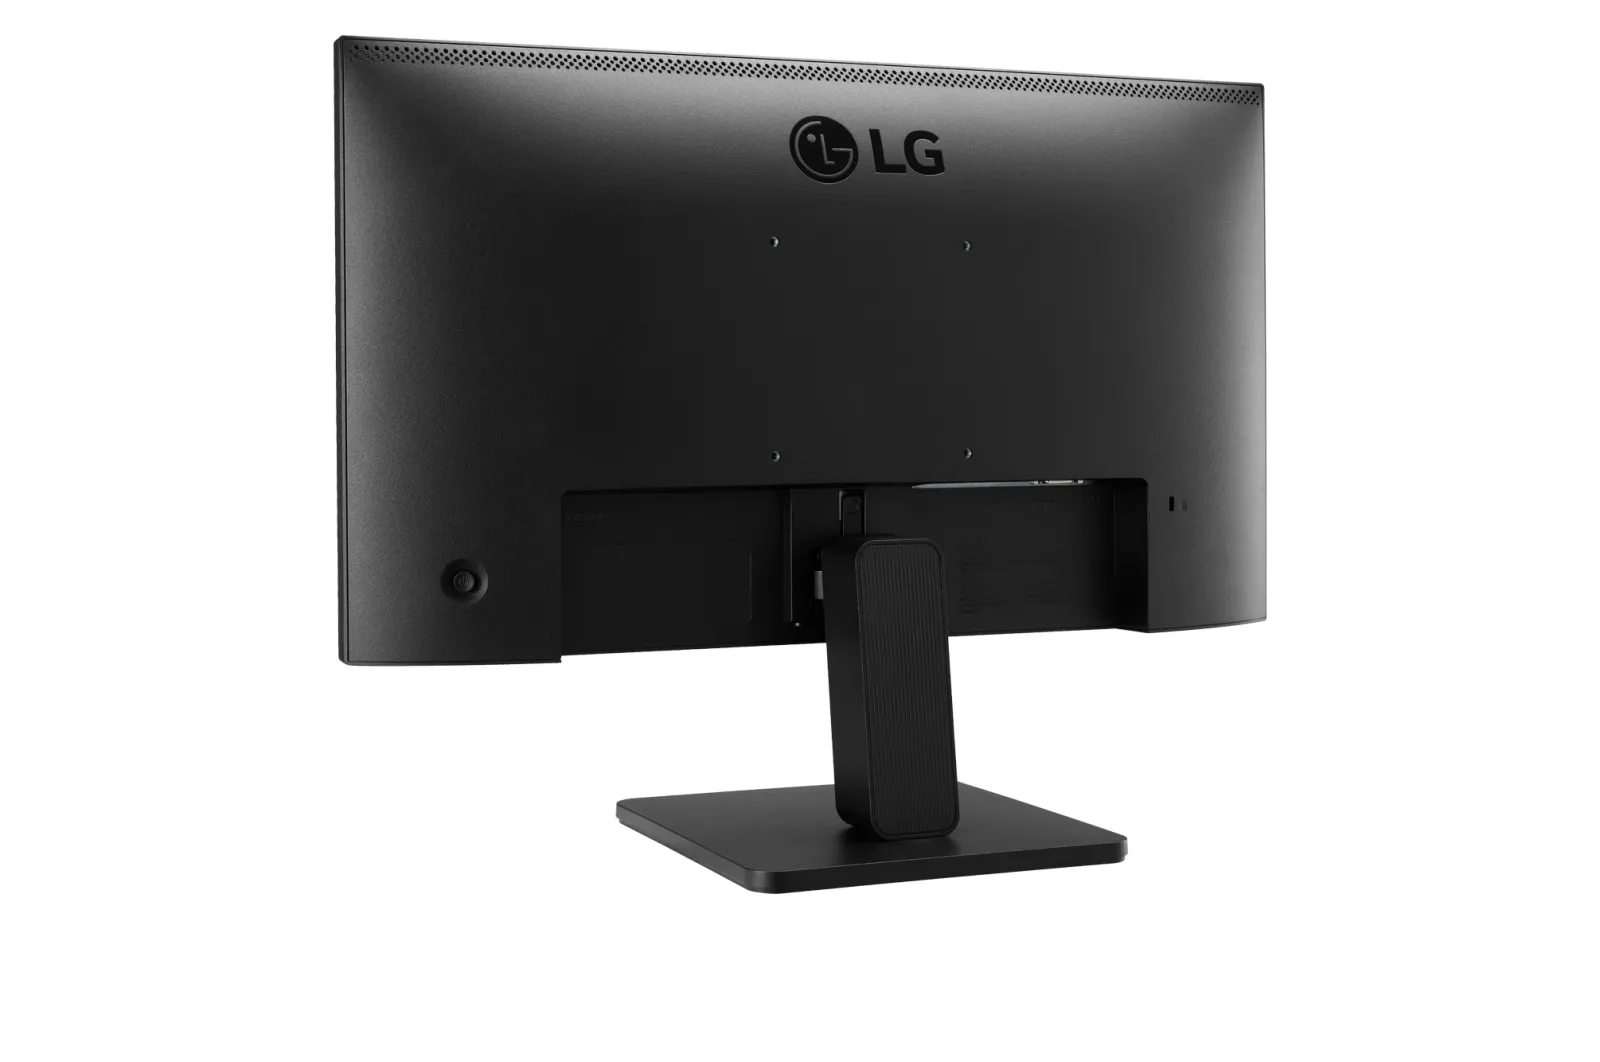 Vente LG 22MR410-B Monitor 22p IPS 16:9 1920x1080 FHD LG au meilleur prix - visuel 6